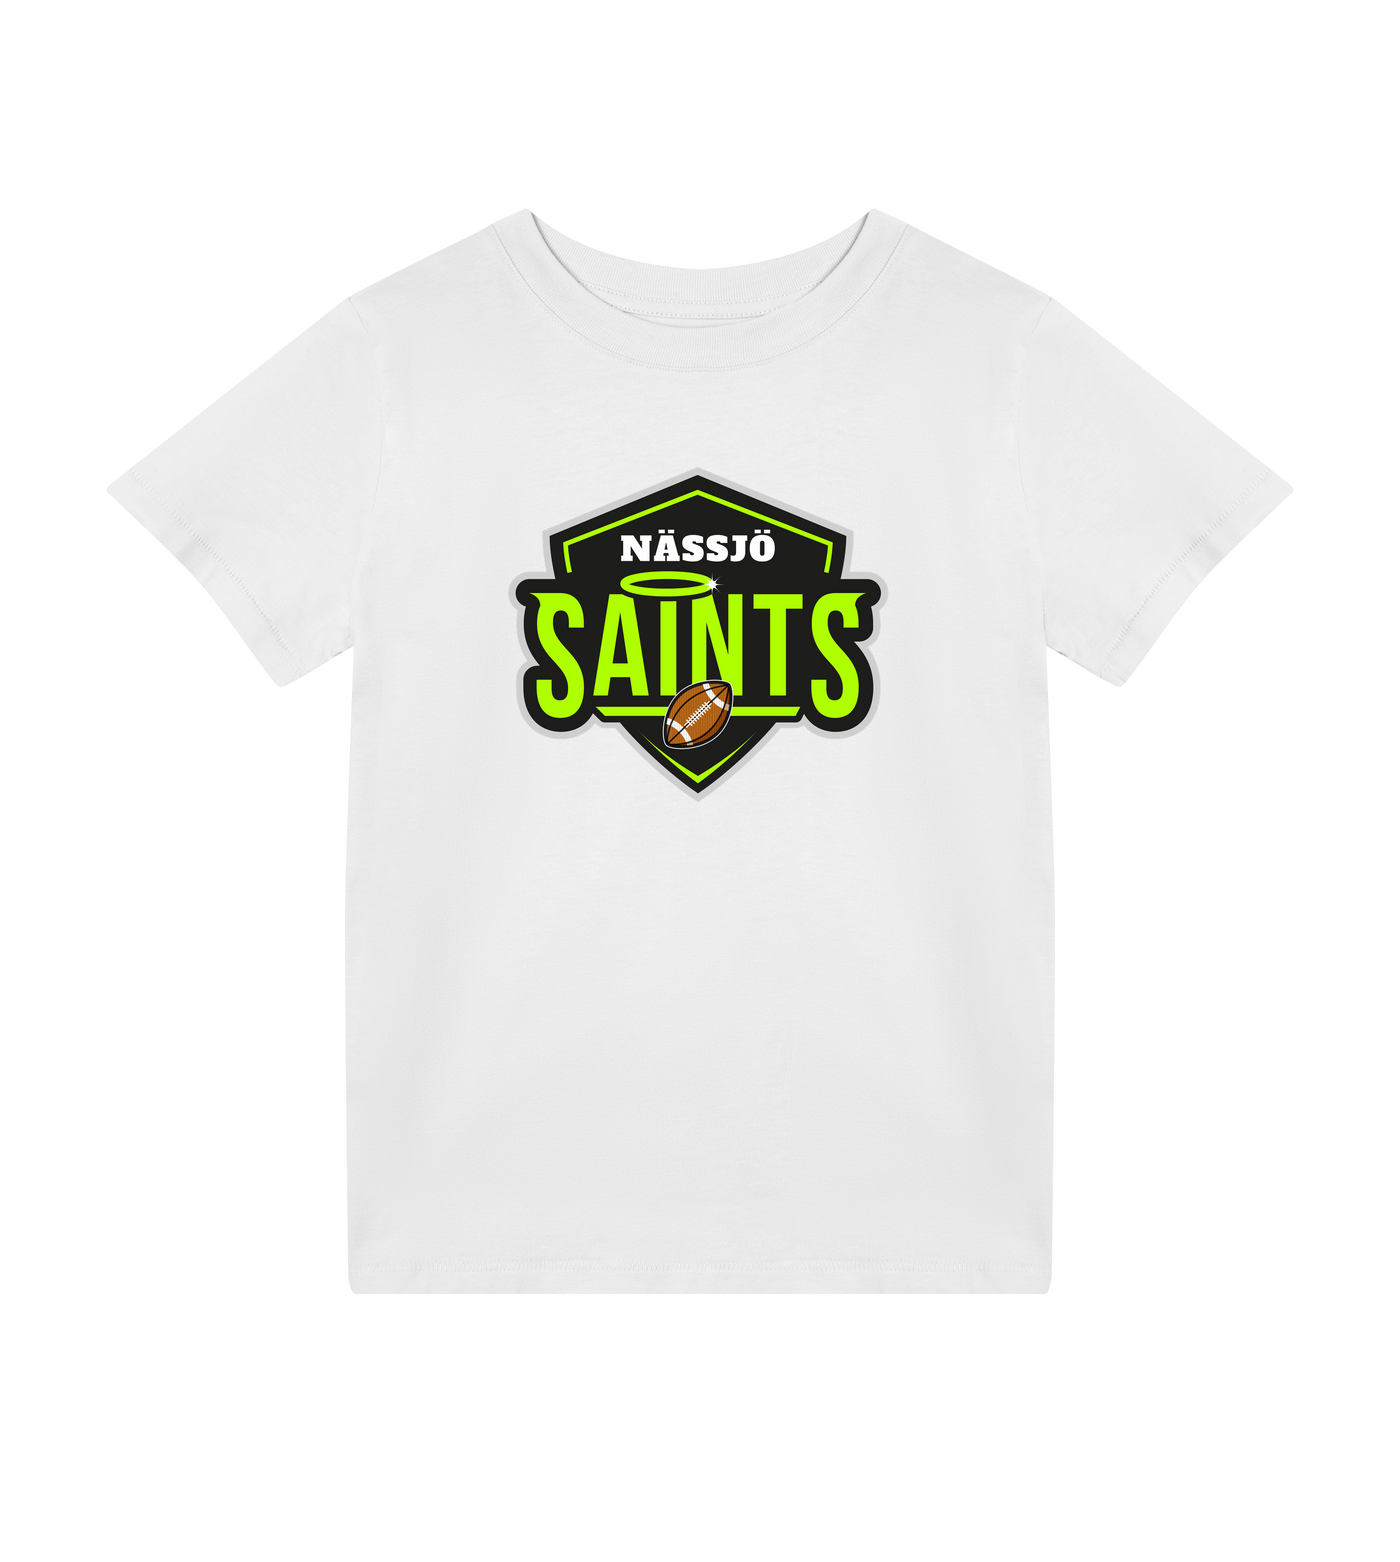 Nässjö Saints Kids Tee - Premium t-shirt from REYRR STUDIO - Shop now at Reyrr Athletics